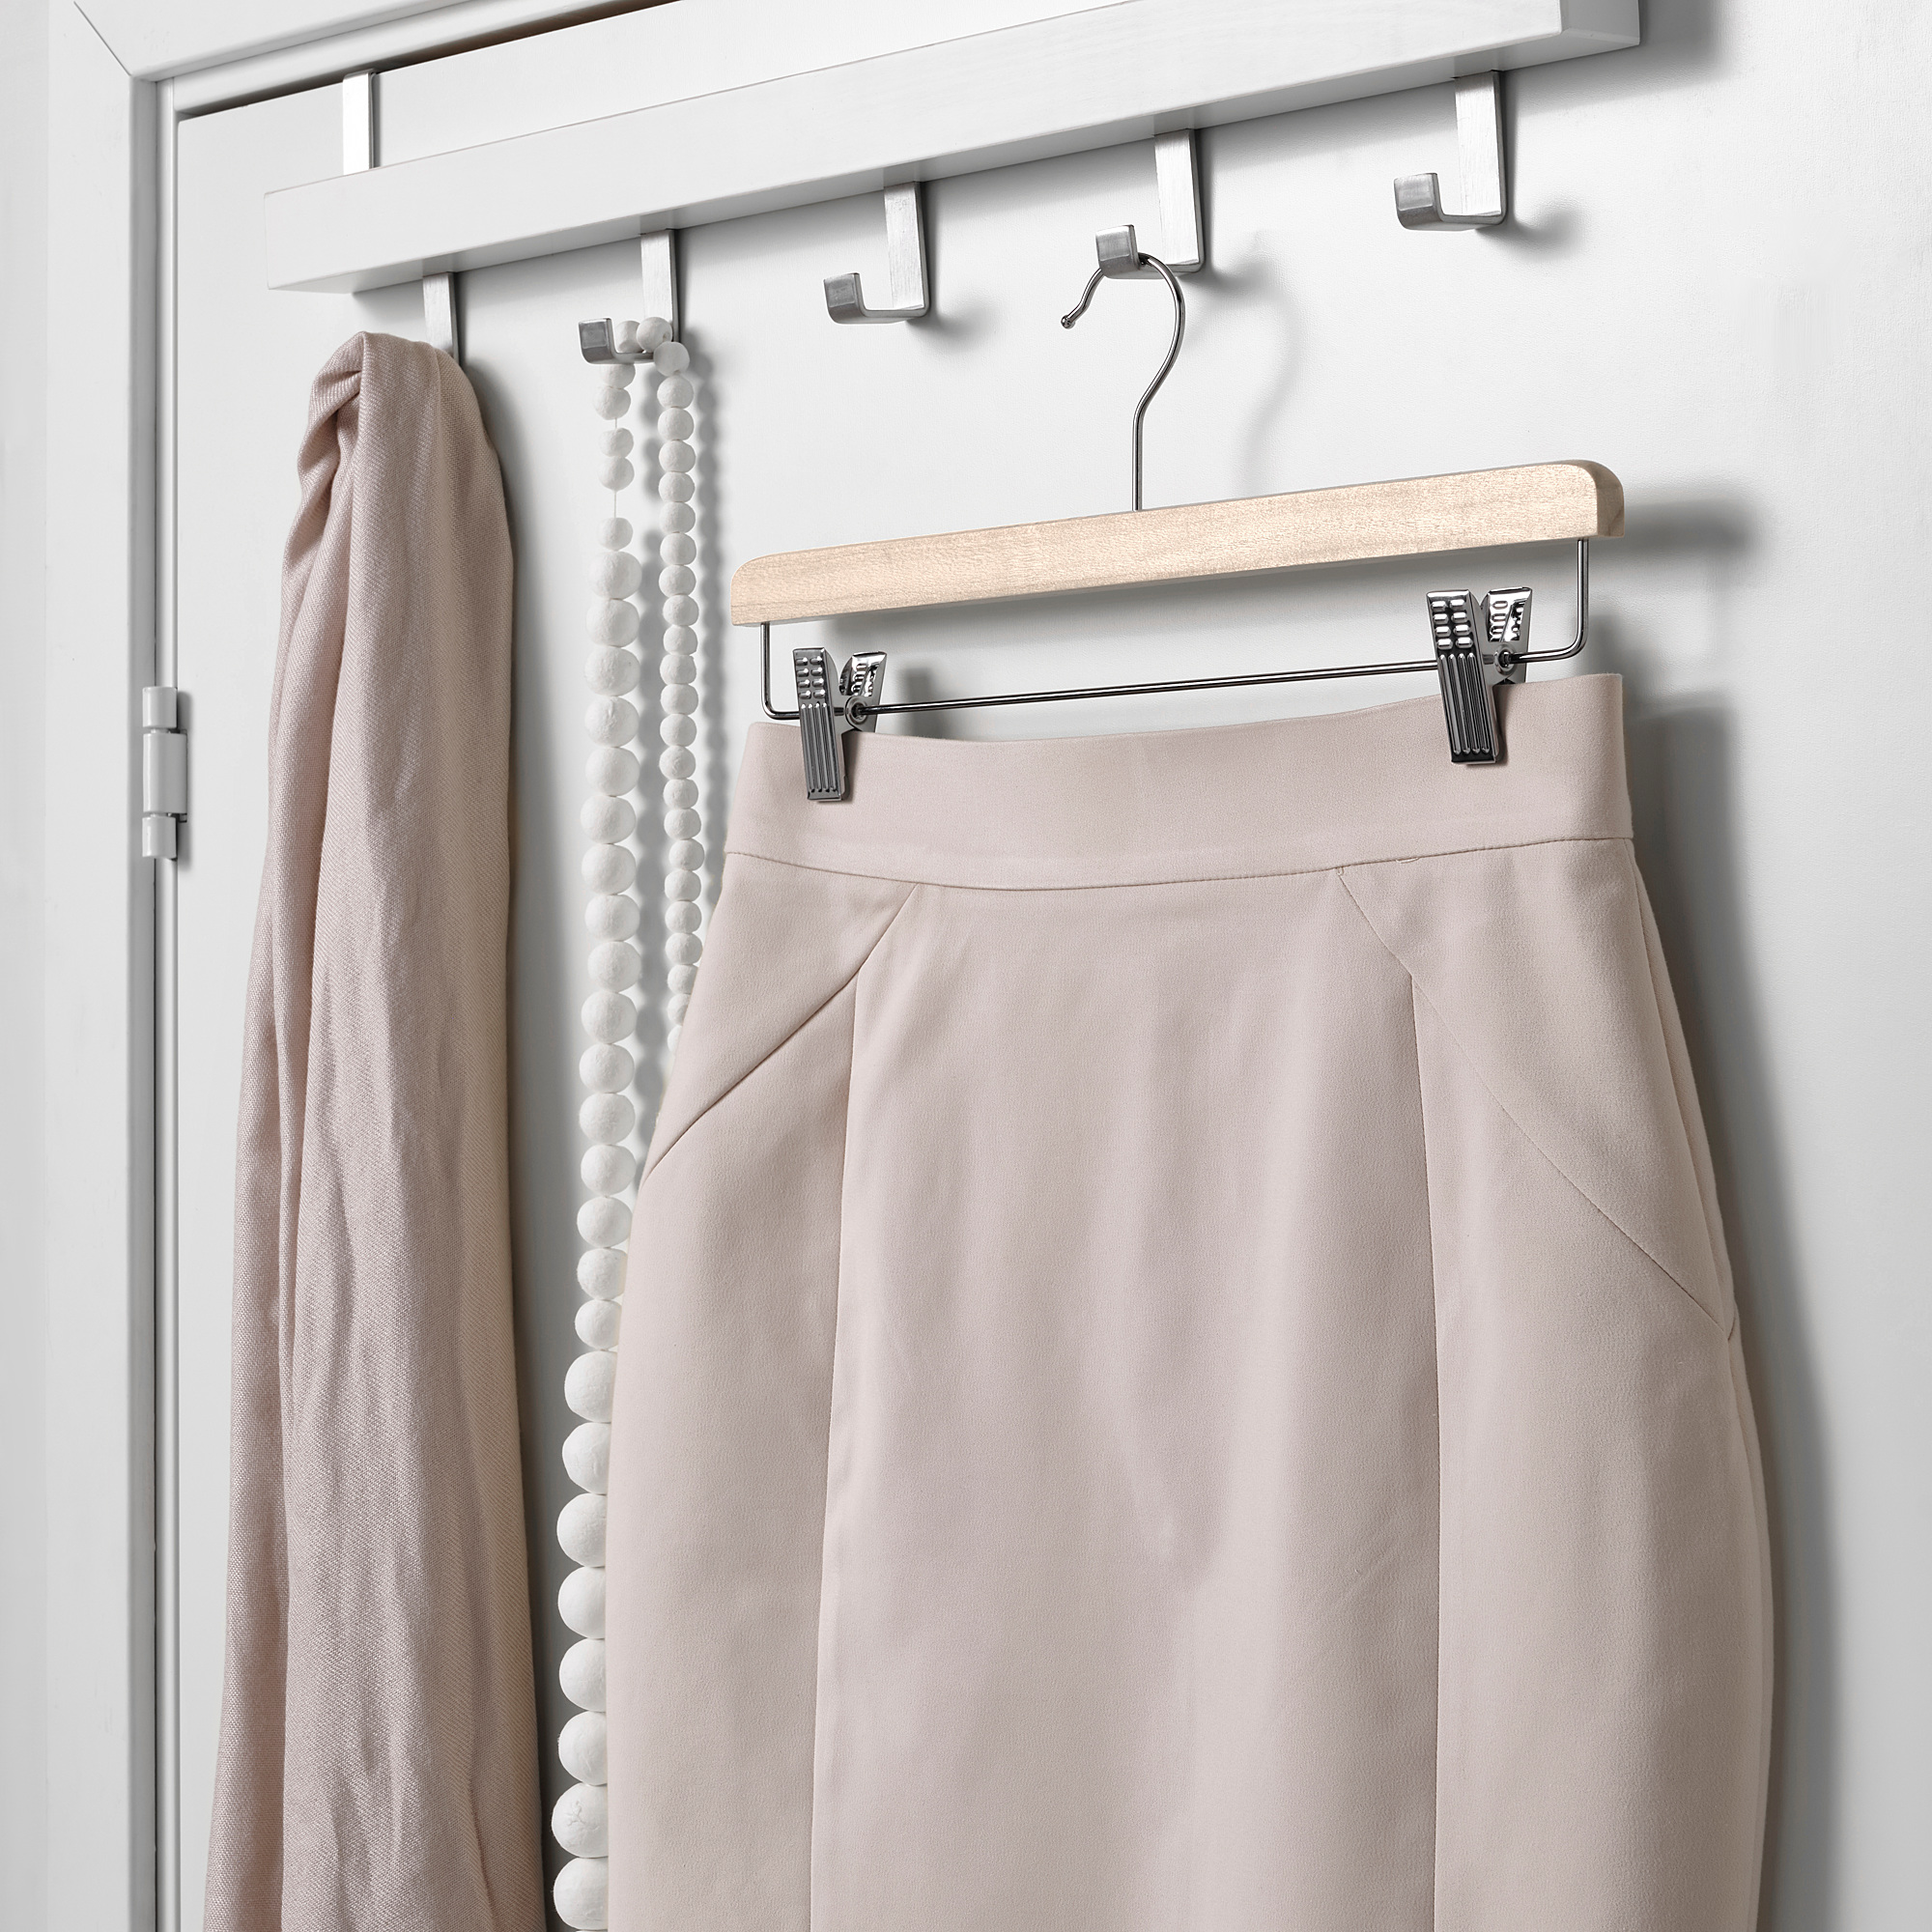 BUMERANG skirt hanger